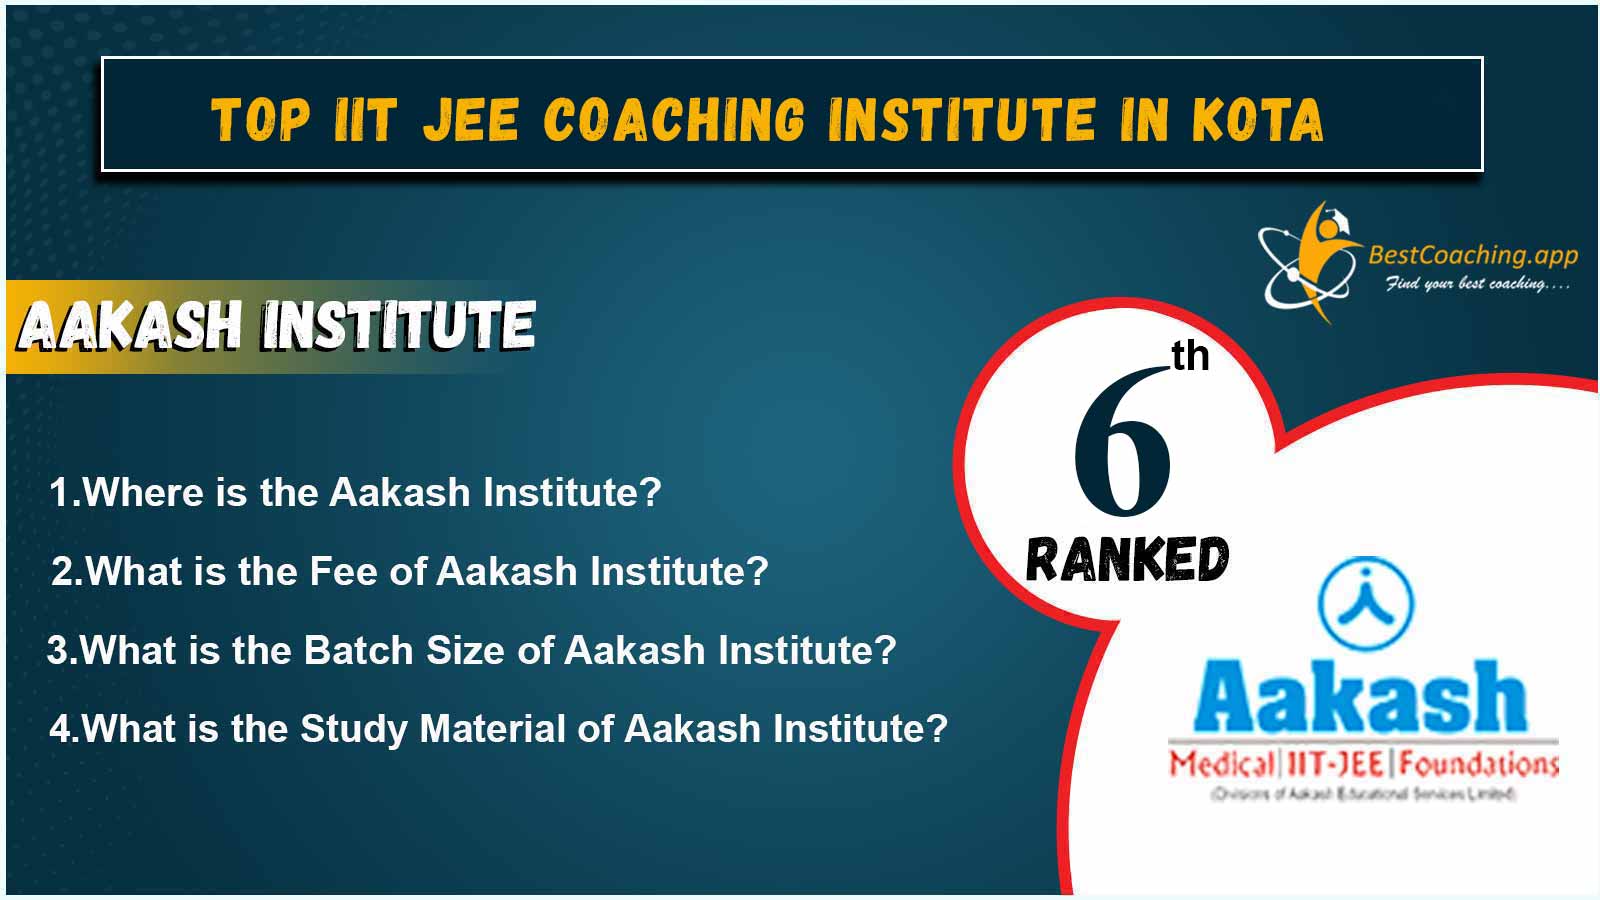 Top 10 IIT JEE Coaching Institute In Kota